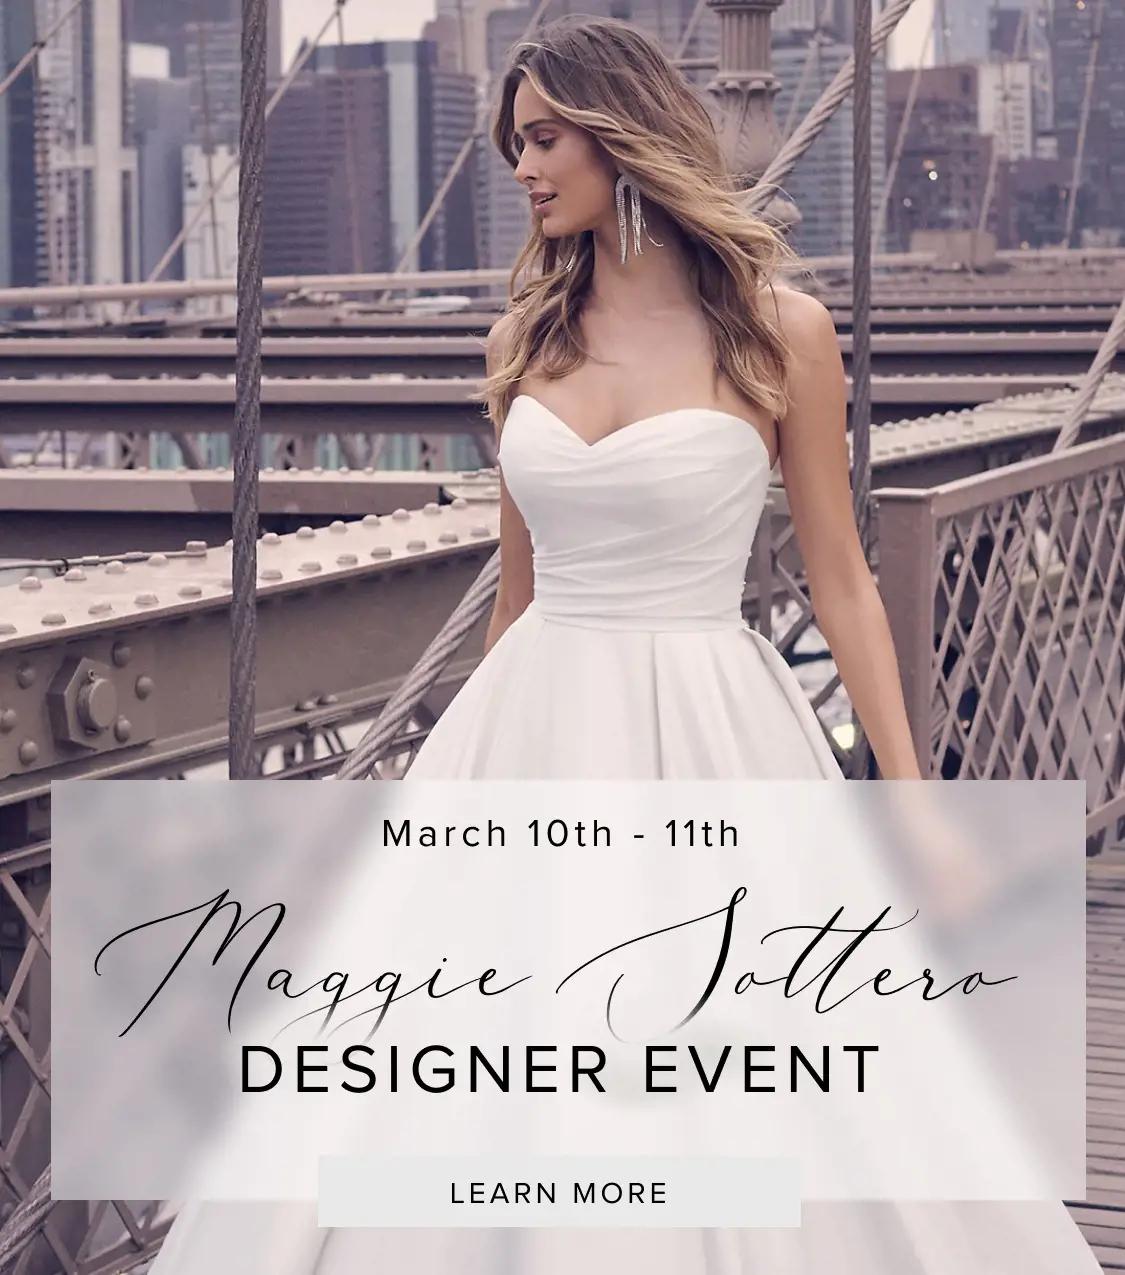 Maggie Sottero Designer Event on March 10th